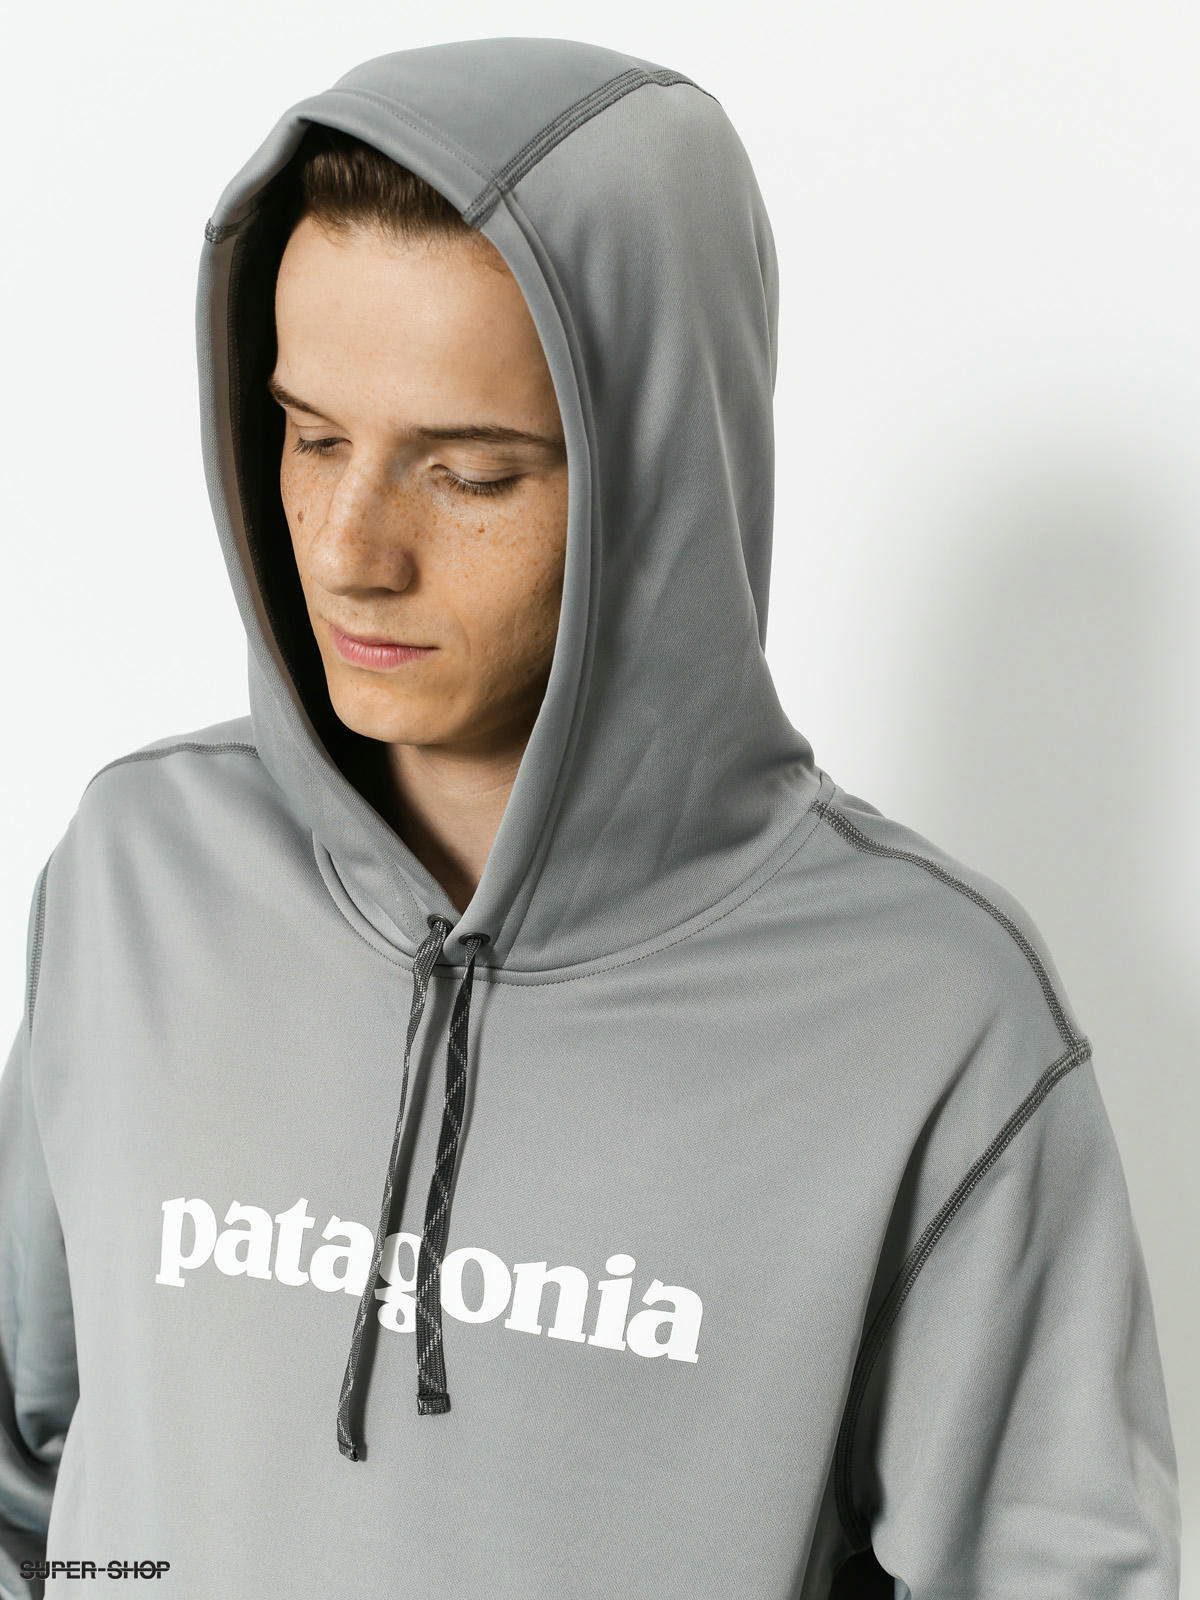 https://static.super-shop.com/948655-patagonia-hoodie-text-logo-polycycle-hd-feather-grey-w-white.jpg?w=1920